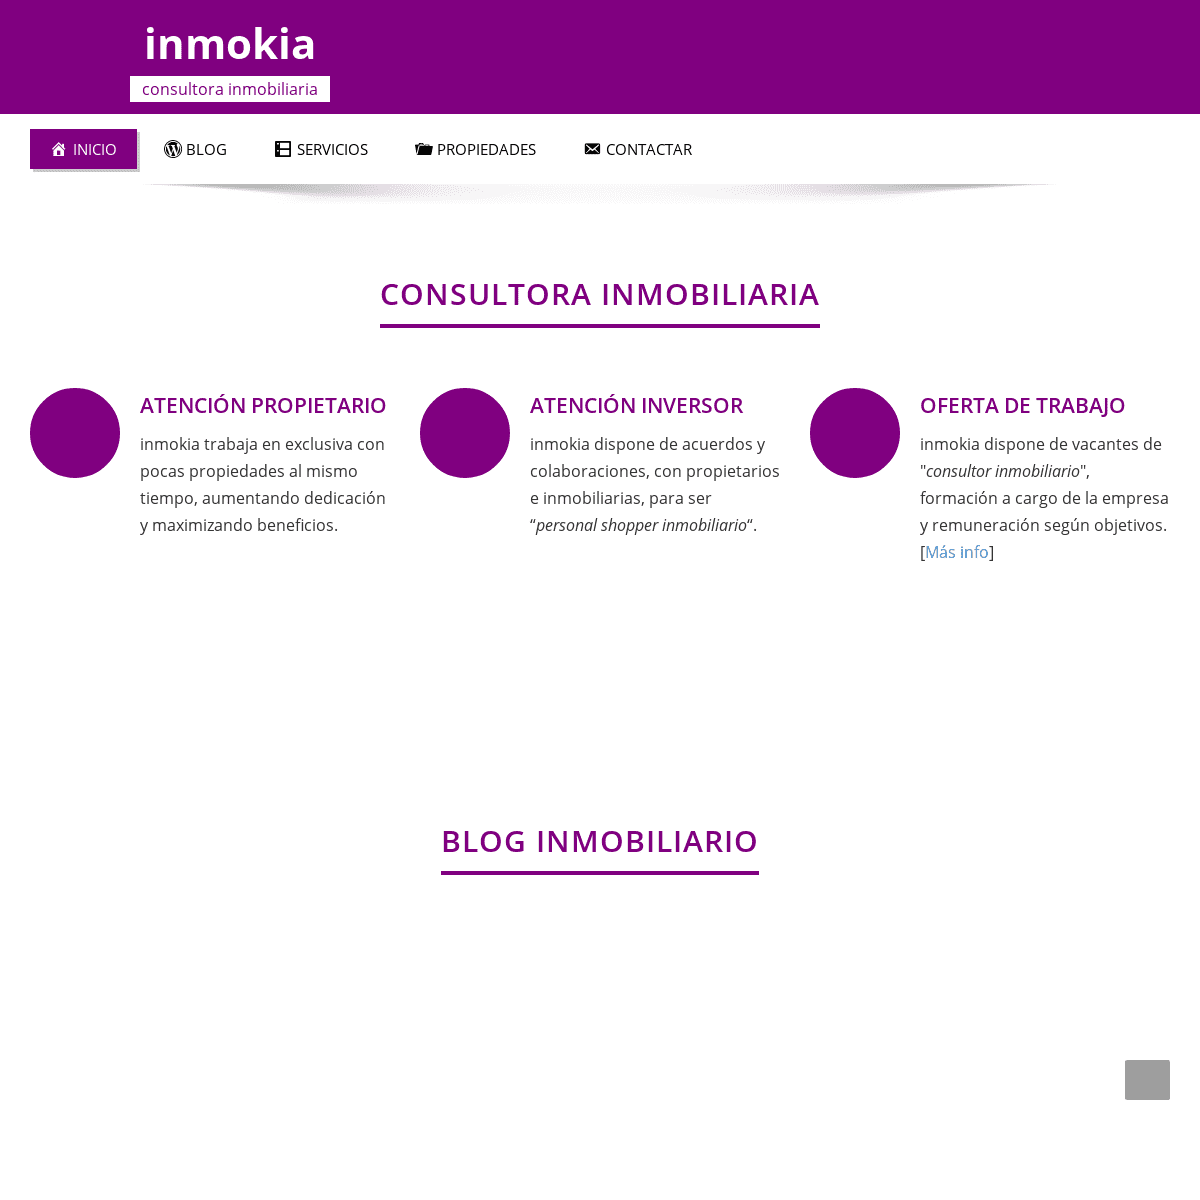 A complete backup of inmokia.com